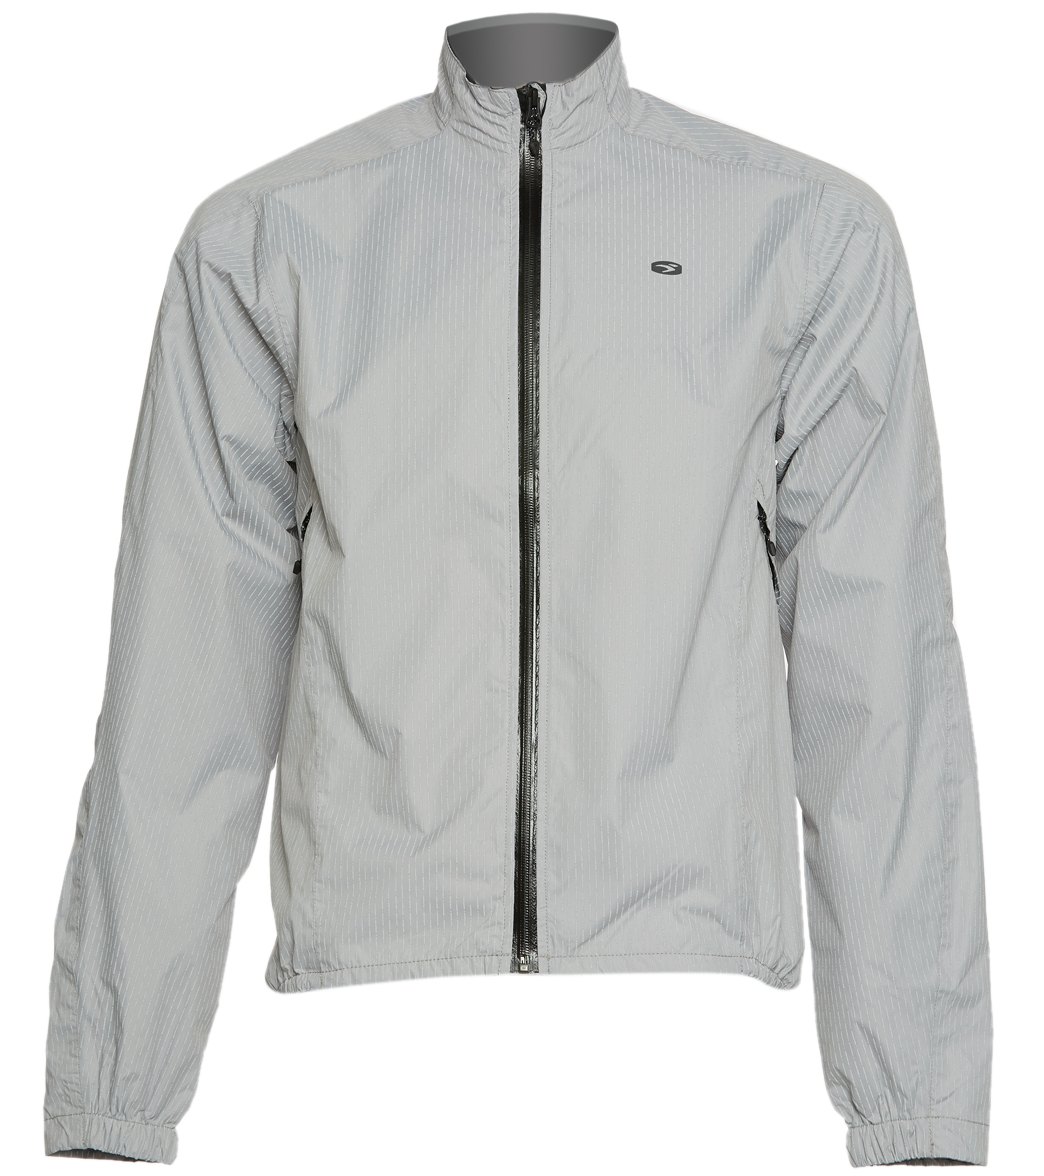 Sugoi Men's Zap Bike Jacket - Light Grey Large Polyester - Swimoutlet.com